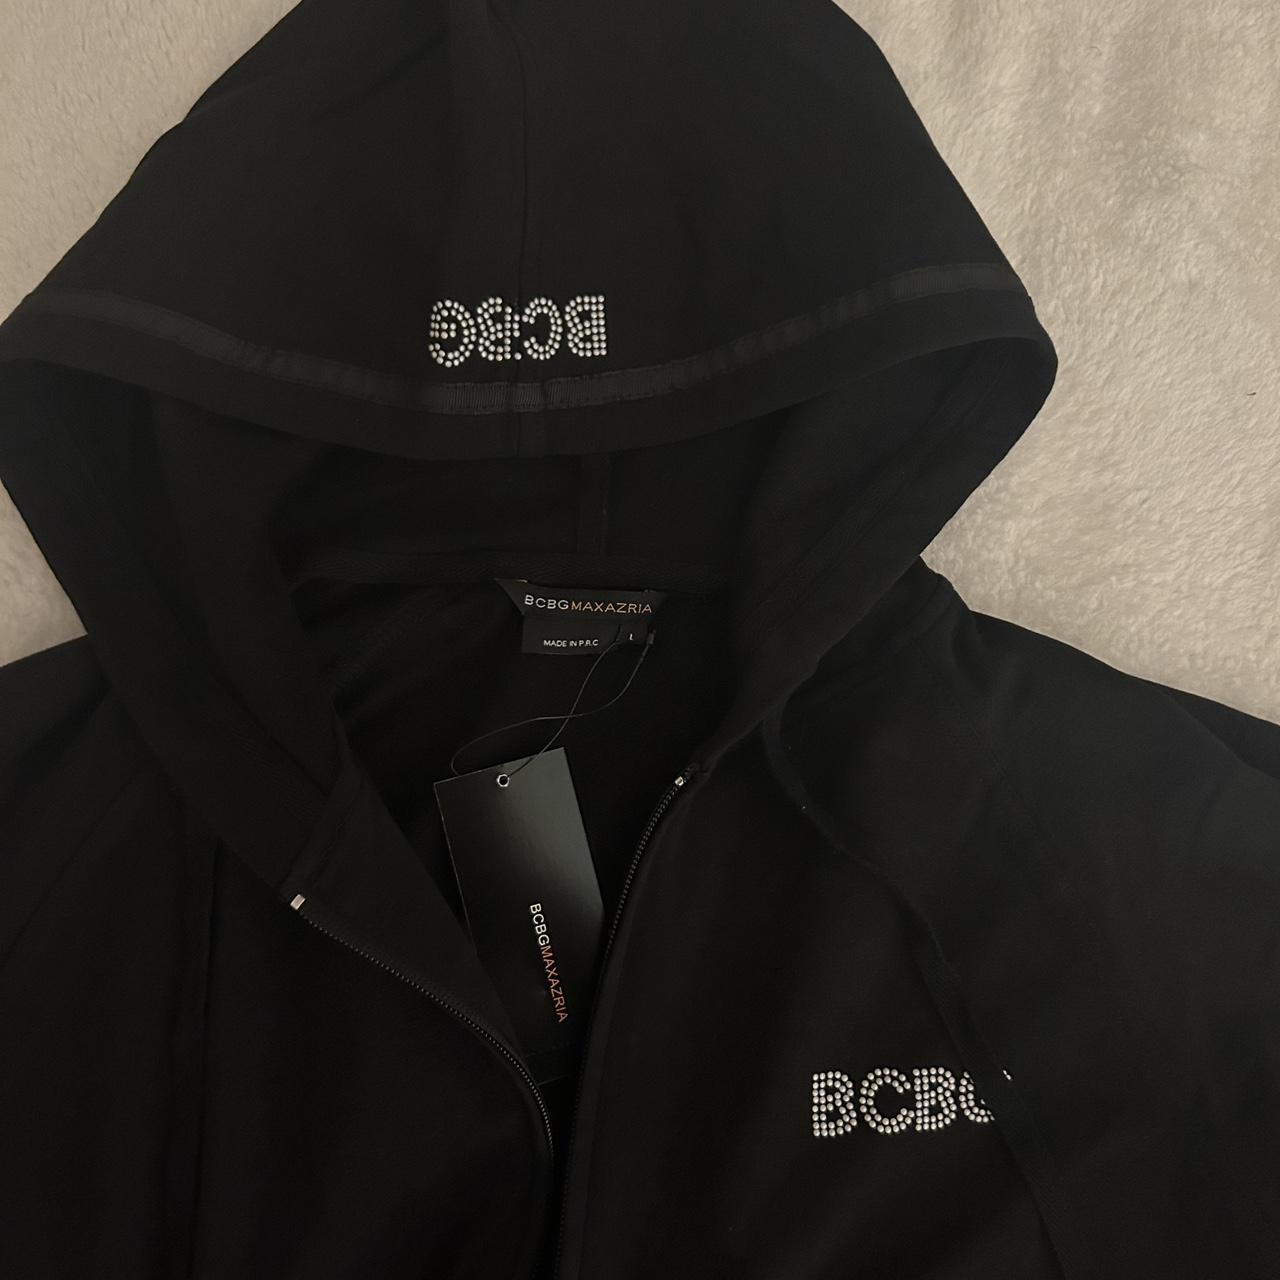 BCBG Brand New Tracksuit ☆*: brand new with... - Depop